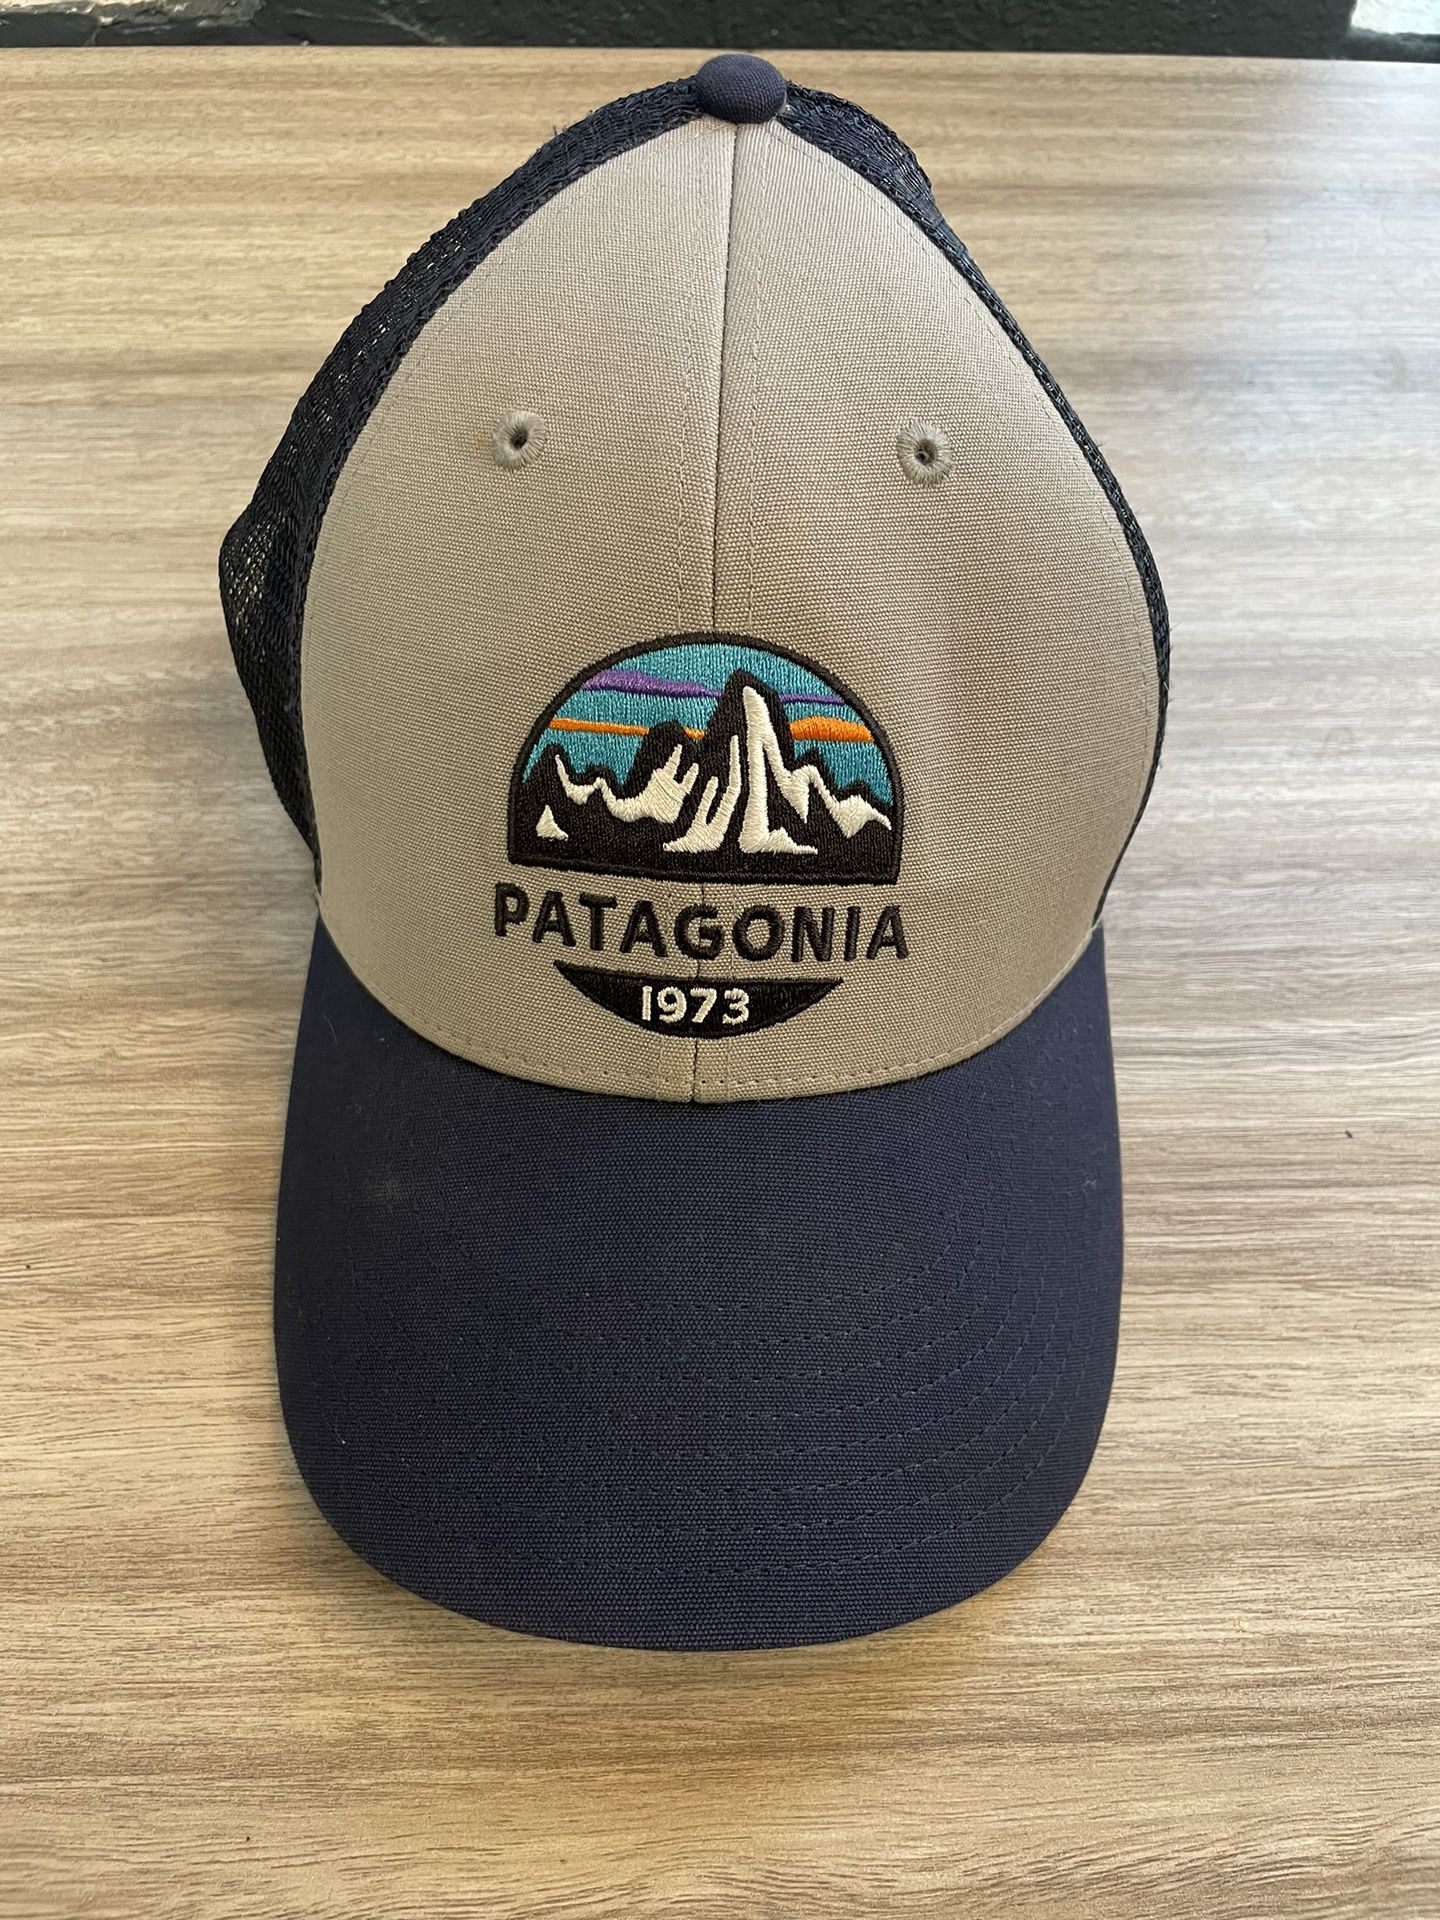 Patagonia Trucker Hat 